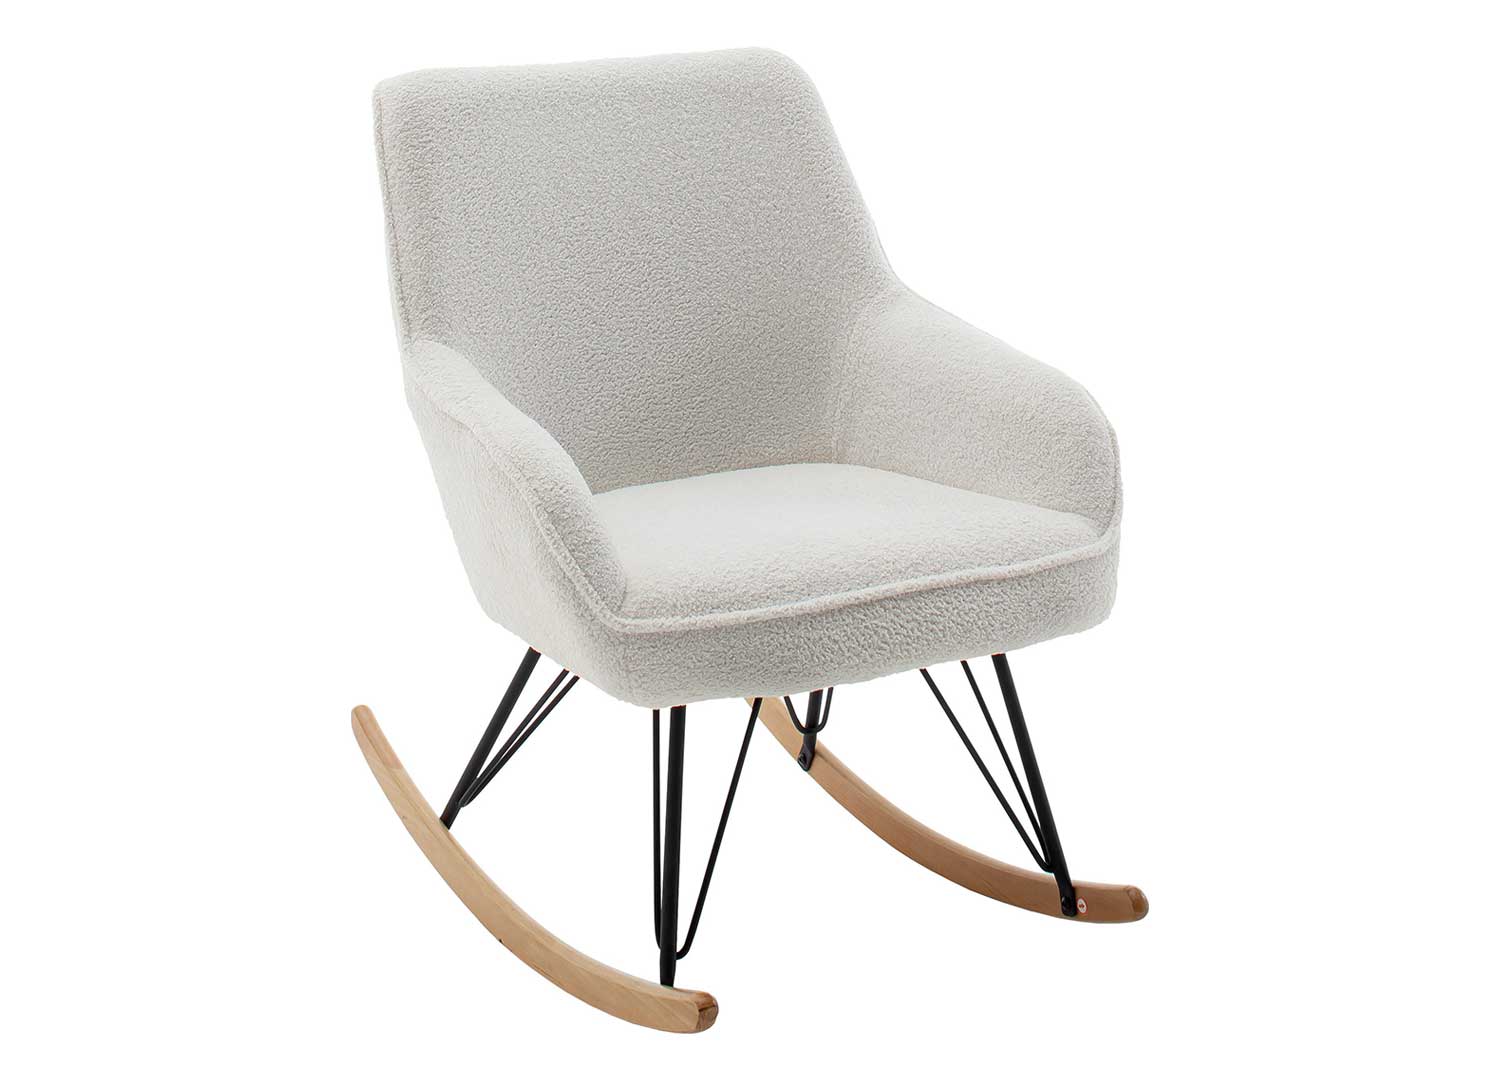 chaise a bascule confortable en tissu blanc